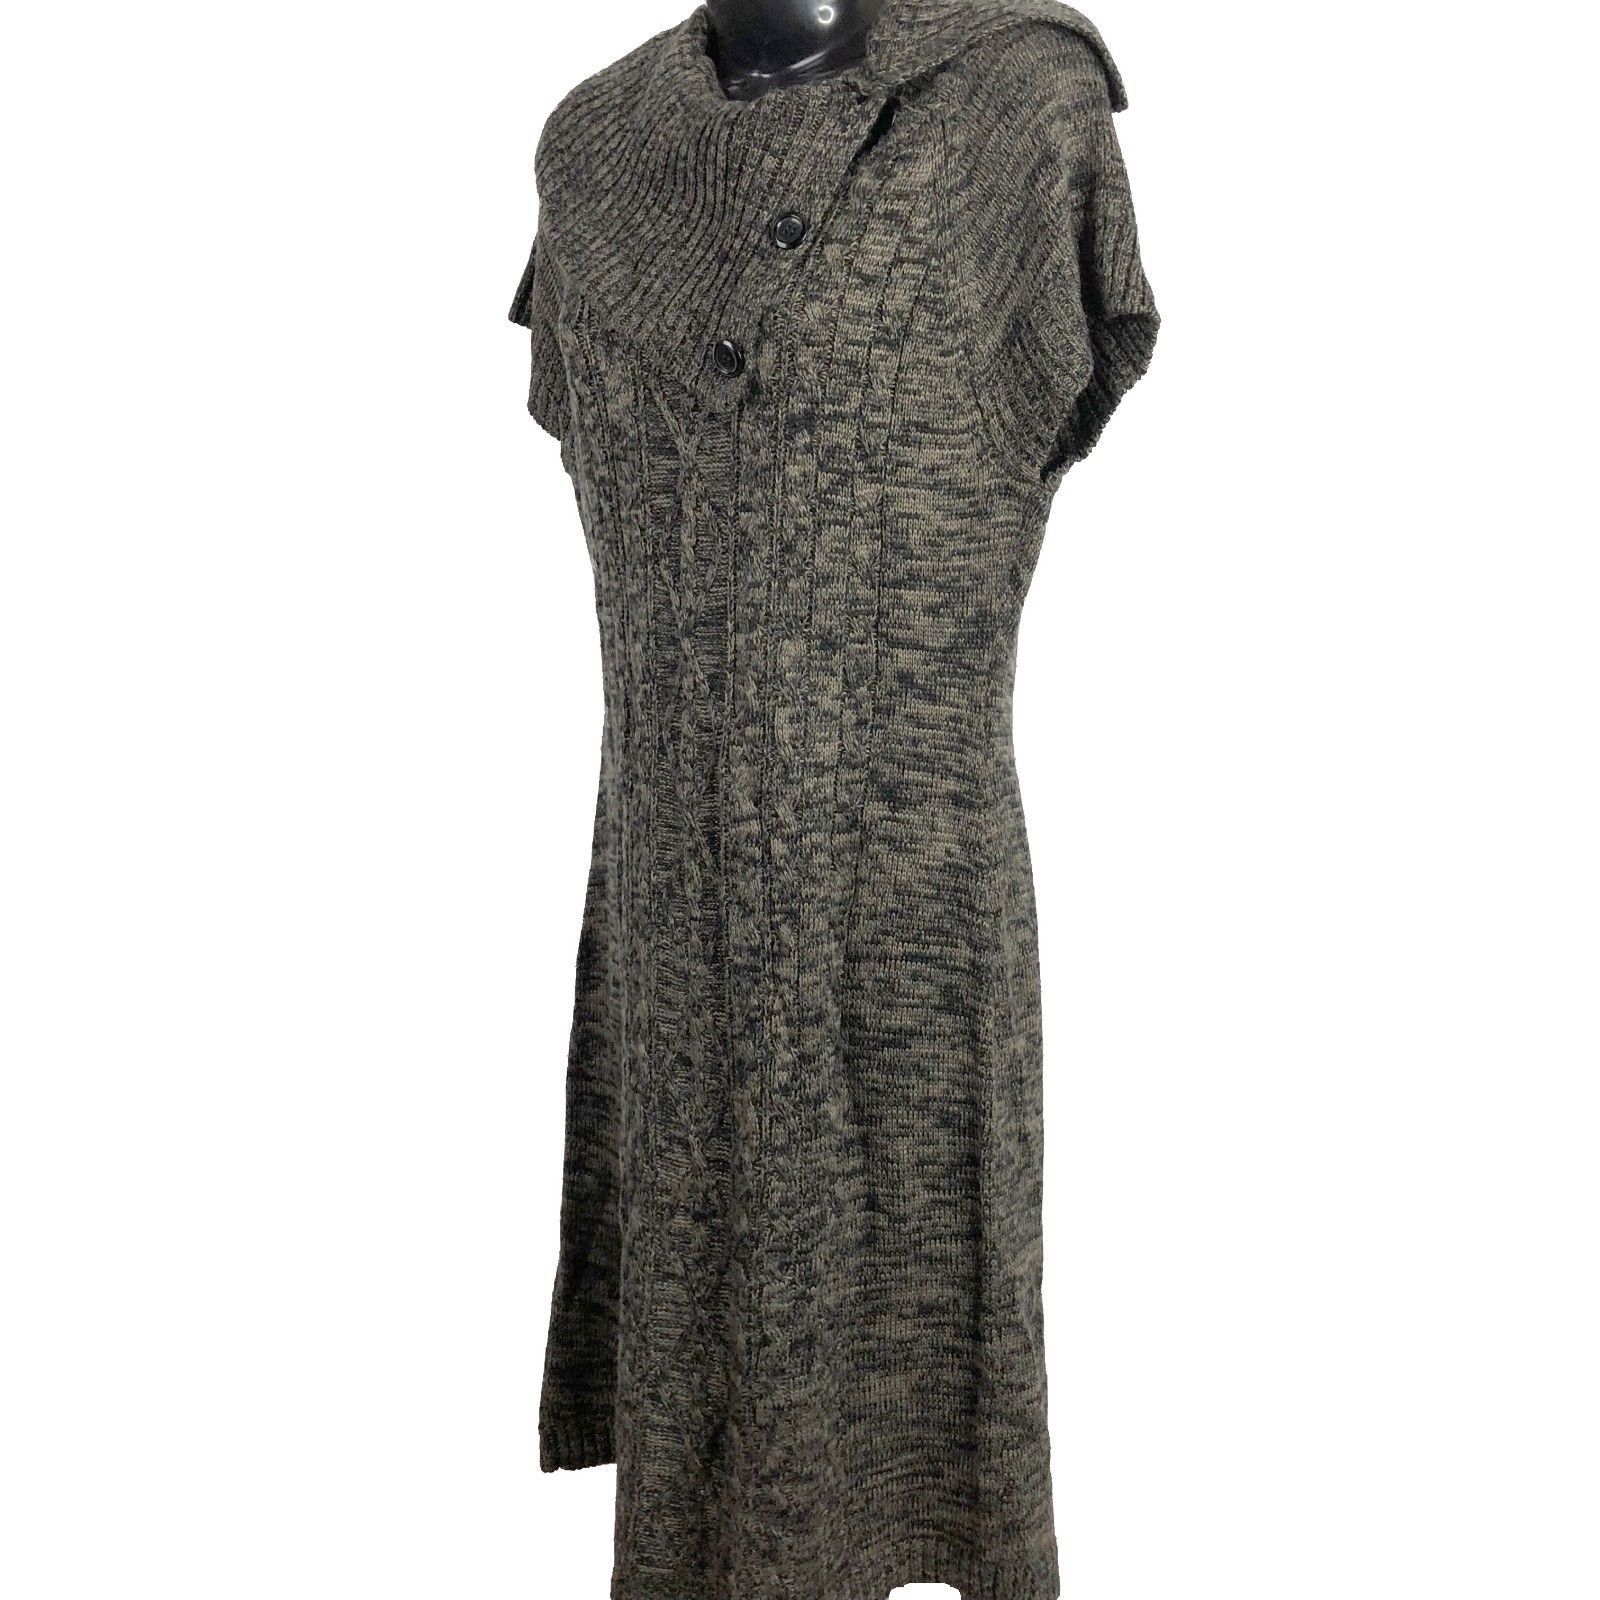 Calvin Klein Black Tan Medium Cable Knit Cowl Neck Short Sleeve Sweater Dress - $33.37